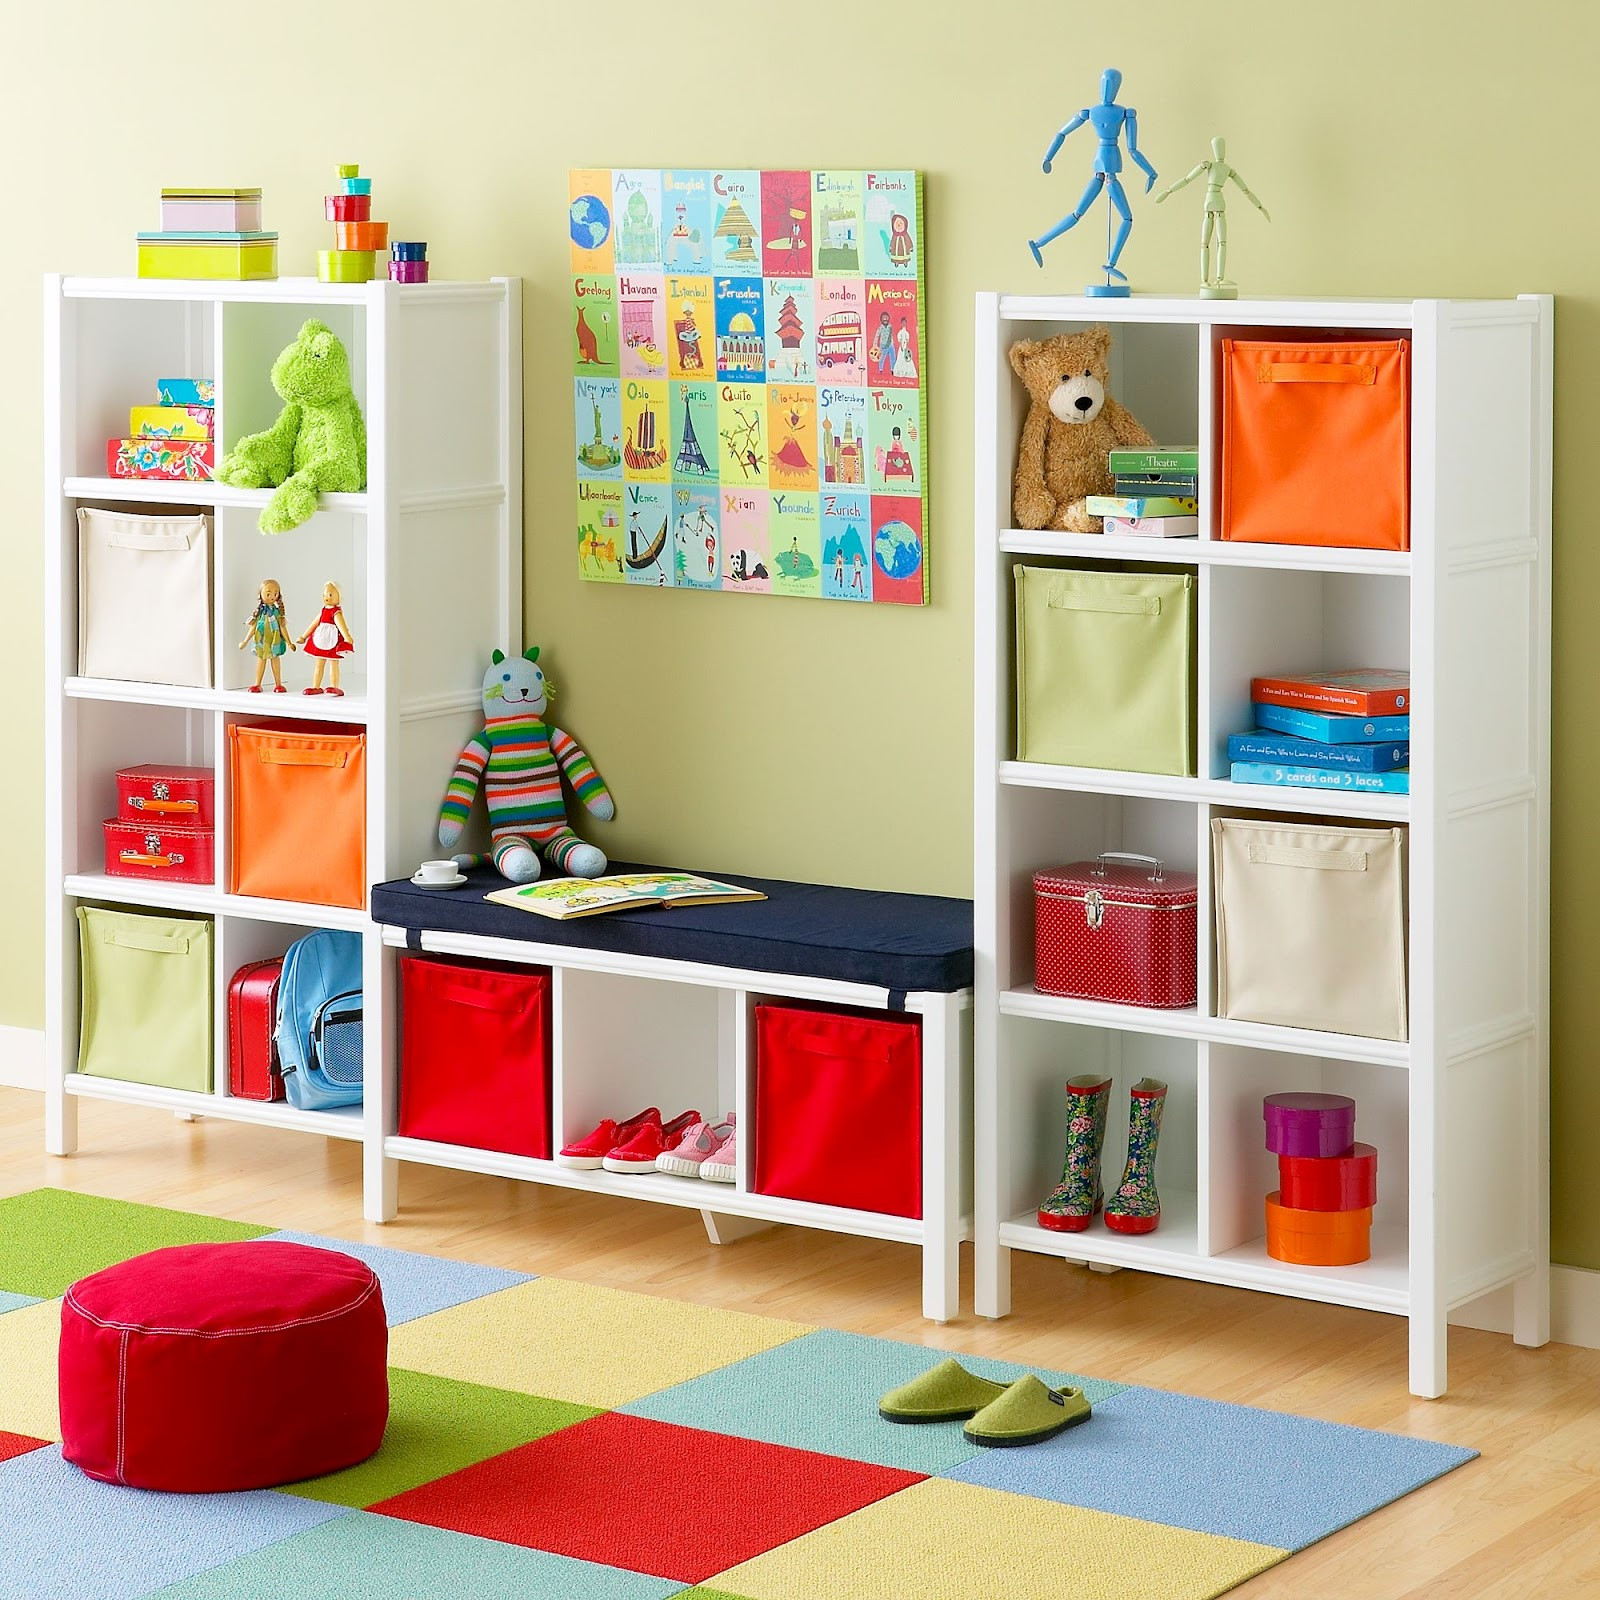 Ideas For Kids Playrooms
 Kids Playroom Designs & Ideas